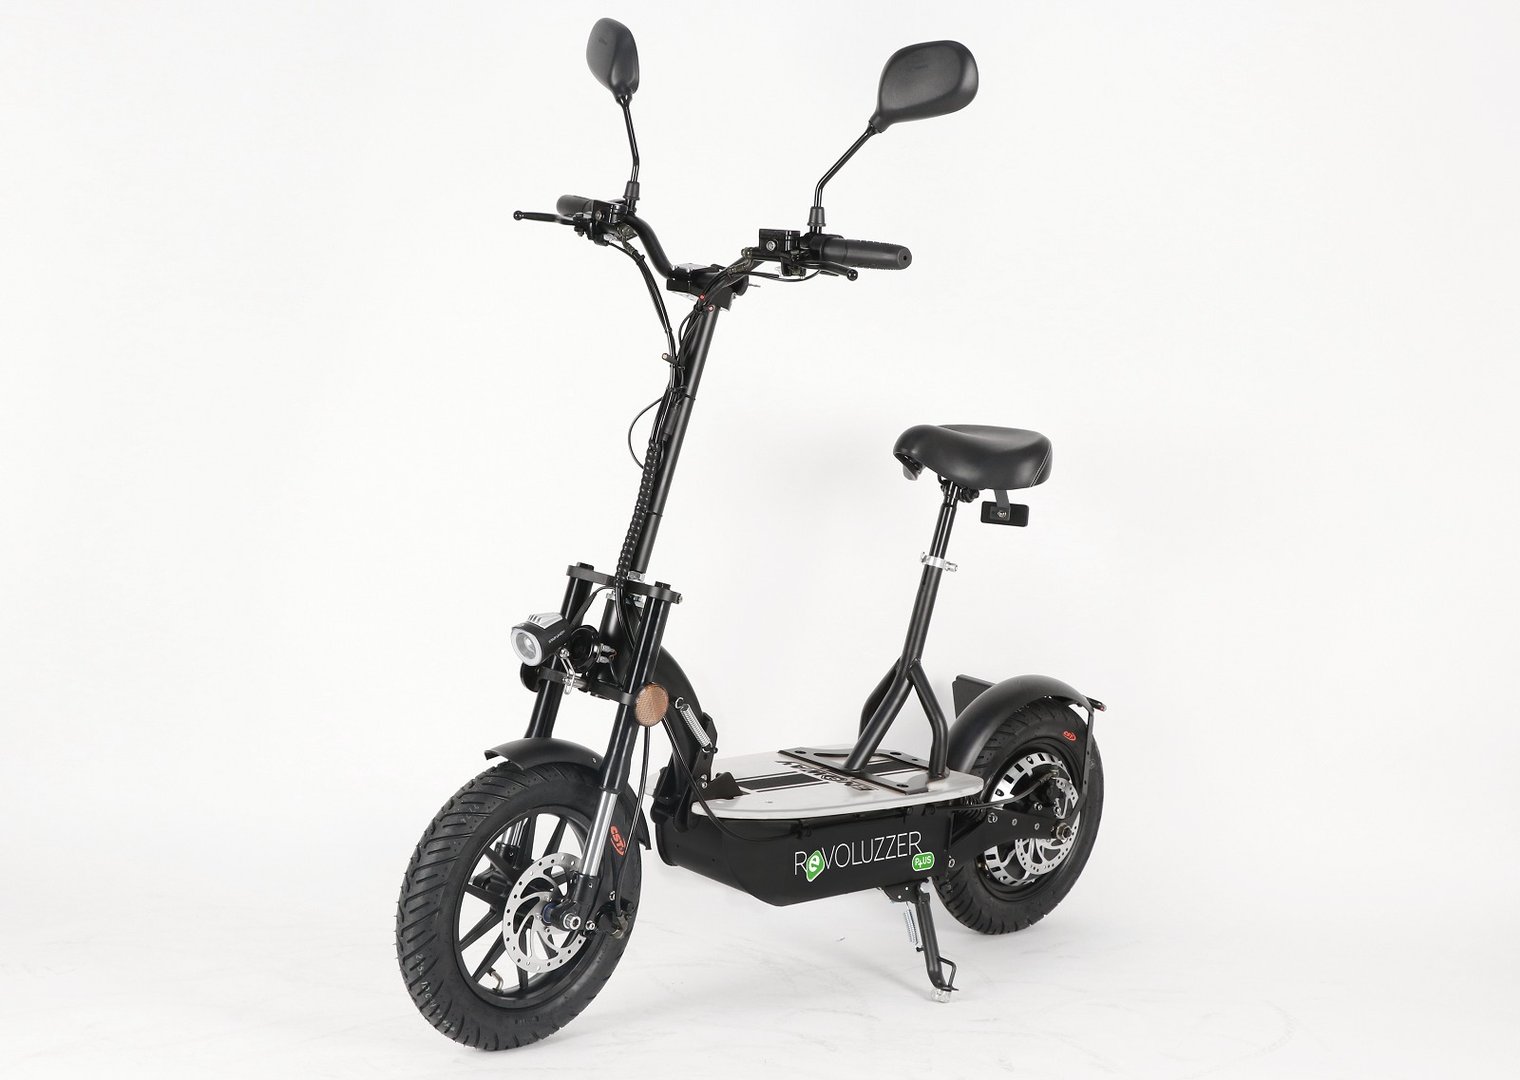 Revoluzzer 1200 - | Scooter Plus Watt 45 Eco-Wheel Elektroroller